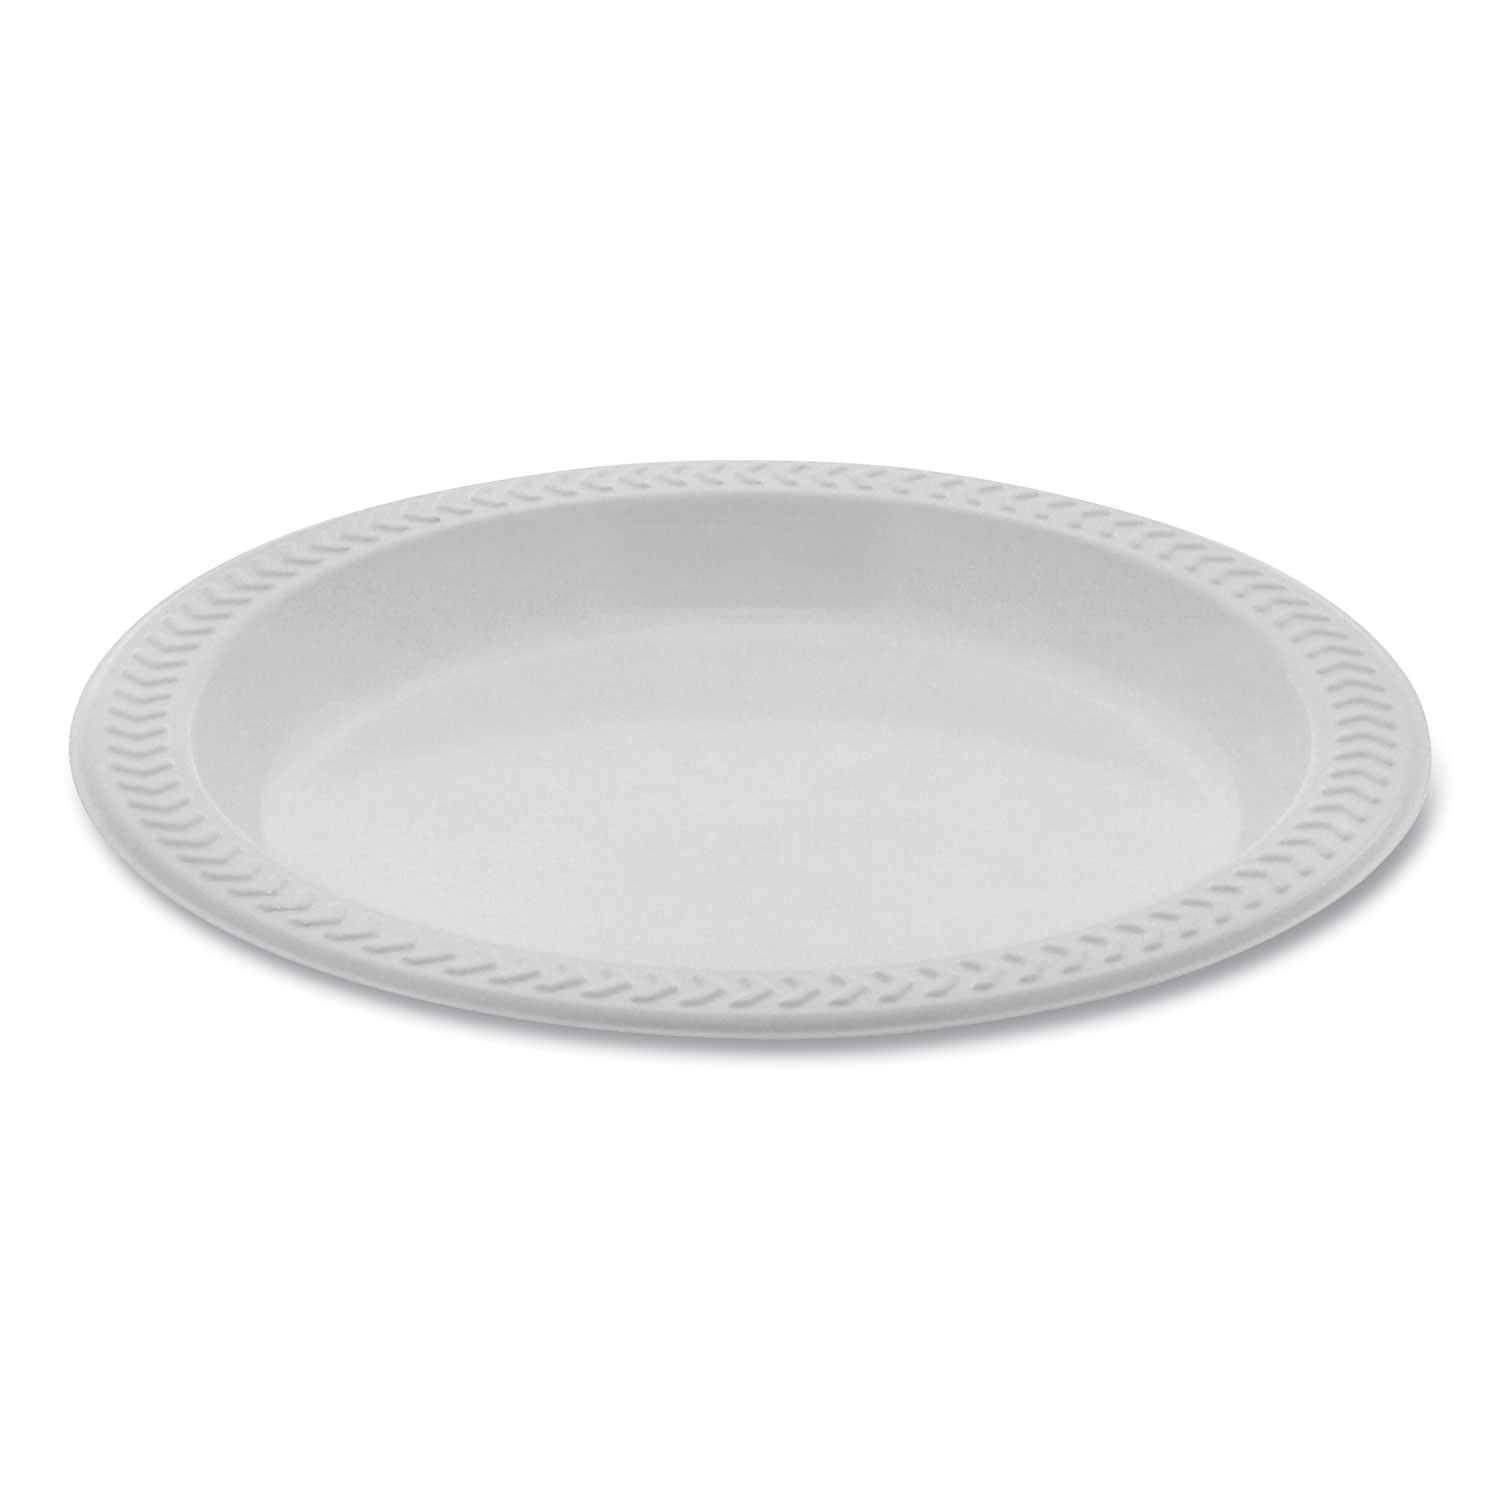 Pactiv Meadoware® OPS Dinnerware, Plate, 6 Diameter, White, 1,000/Carton